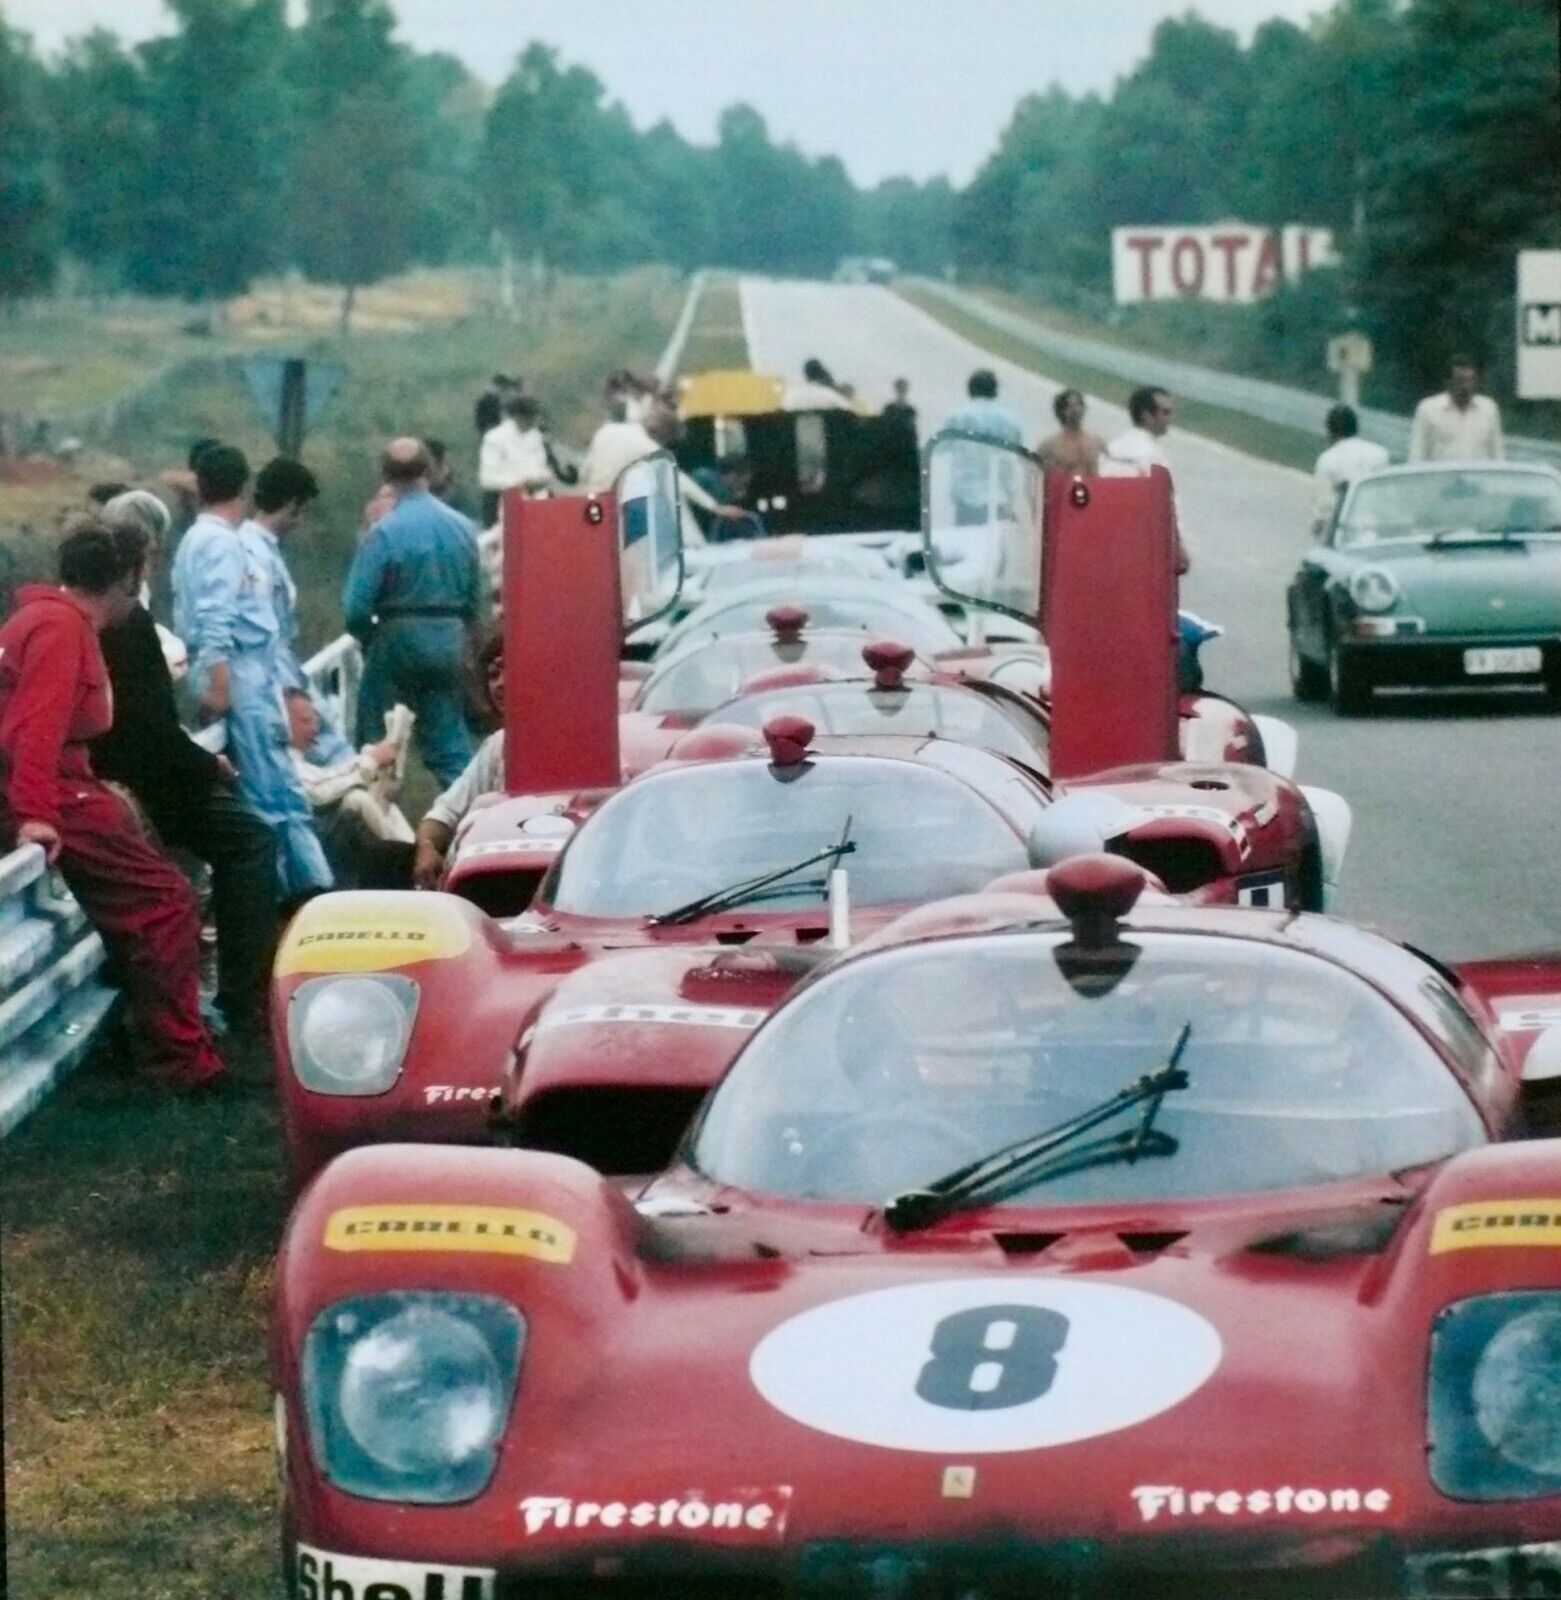 FERRARI 512S PORSCHE 917 1970 Le Mans Movie Car Photo Print 10.5